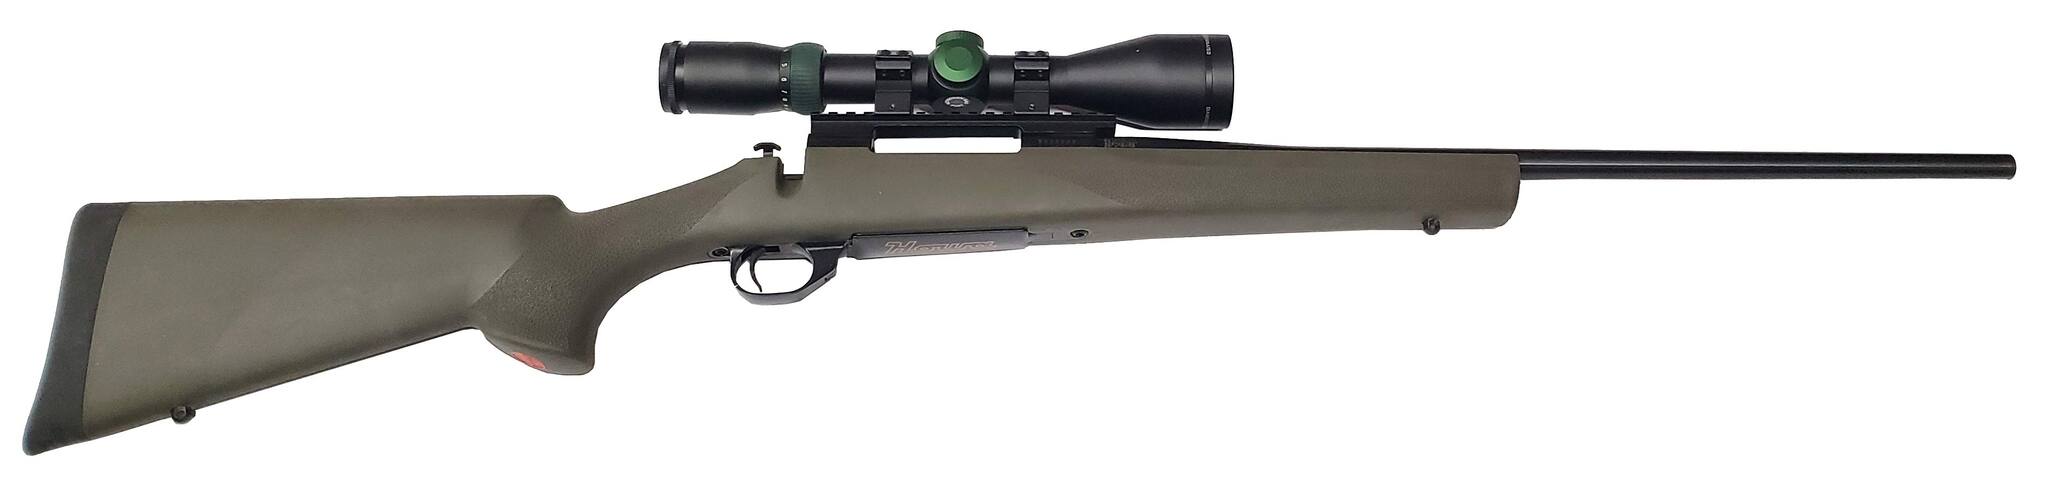 Image of CMMG Endeavor 100 MK4 Rifle 5.56x45mm NATO 18" Barrel 30-Round Black